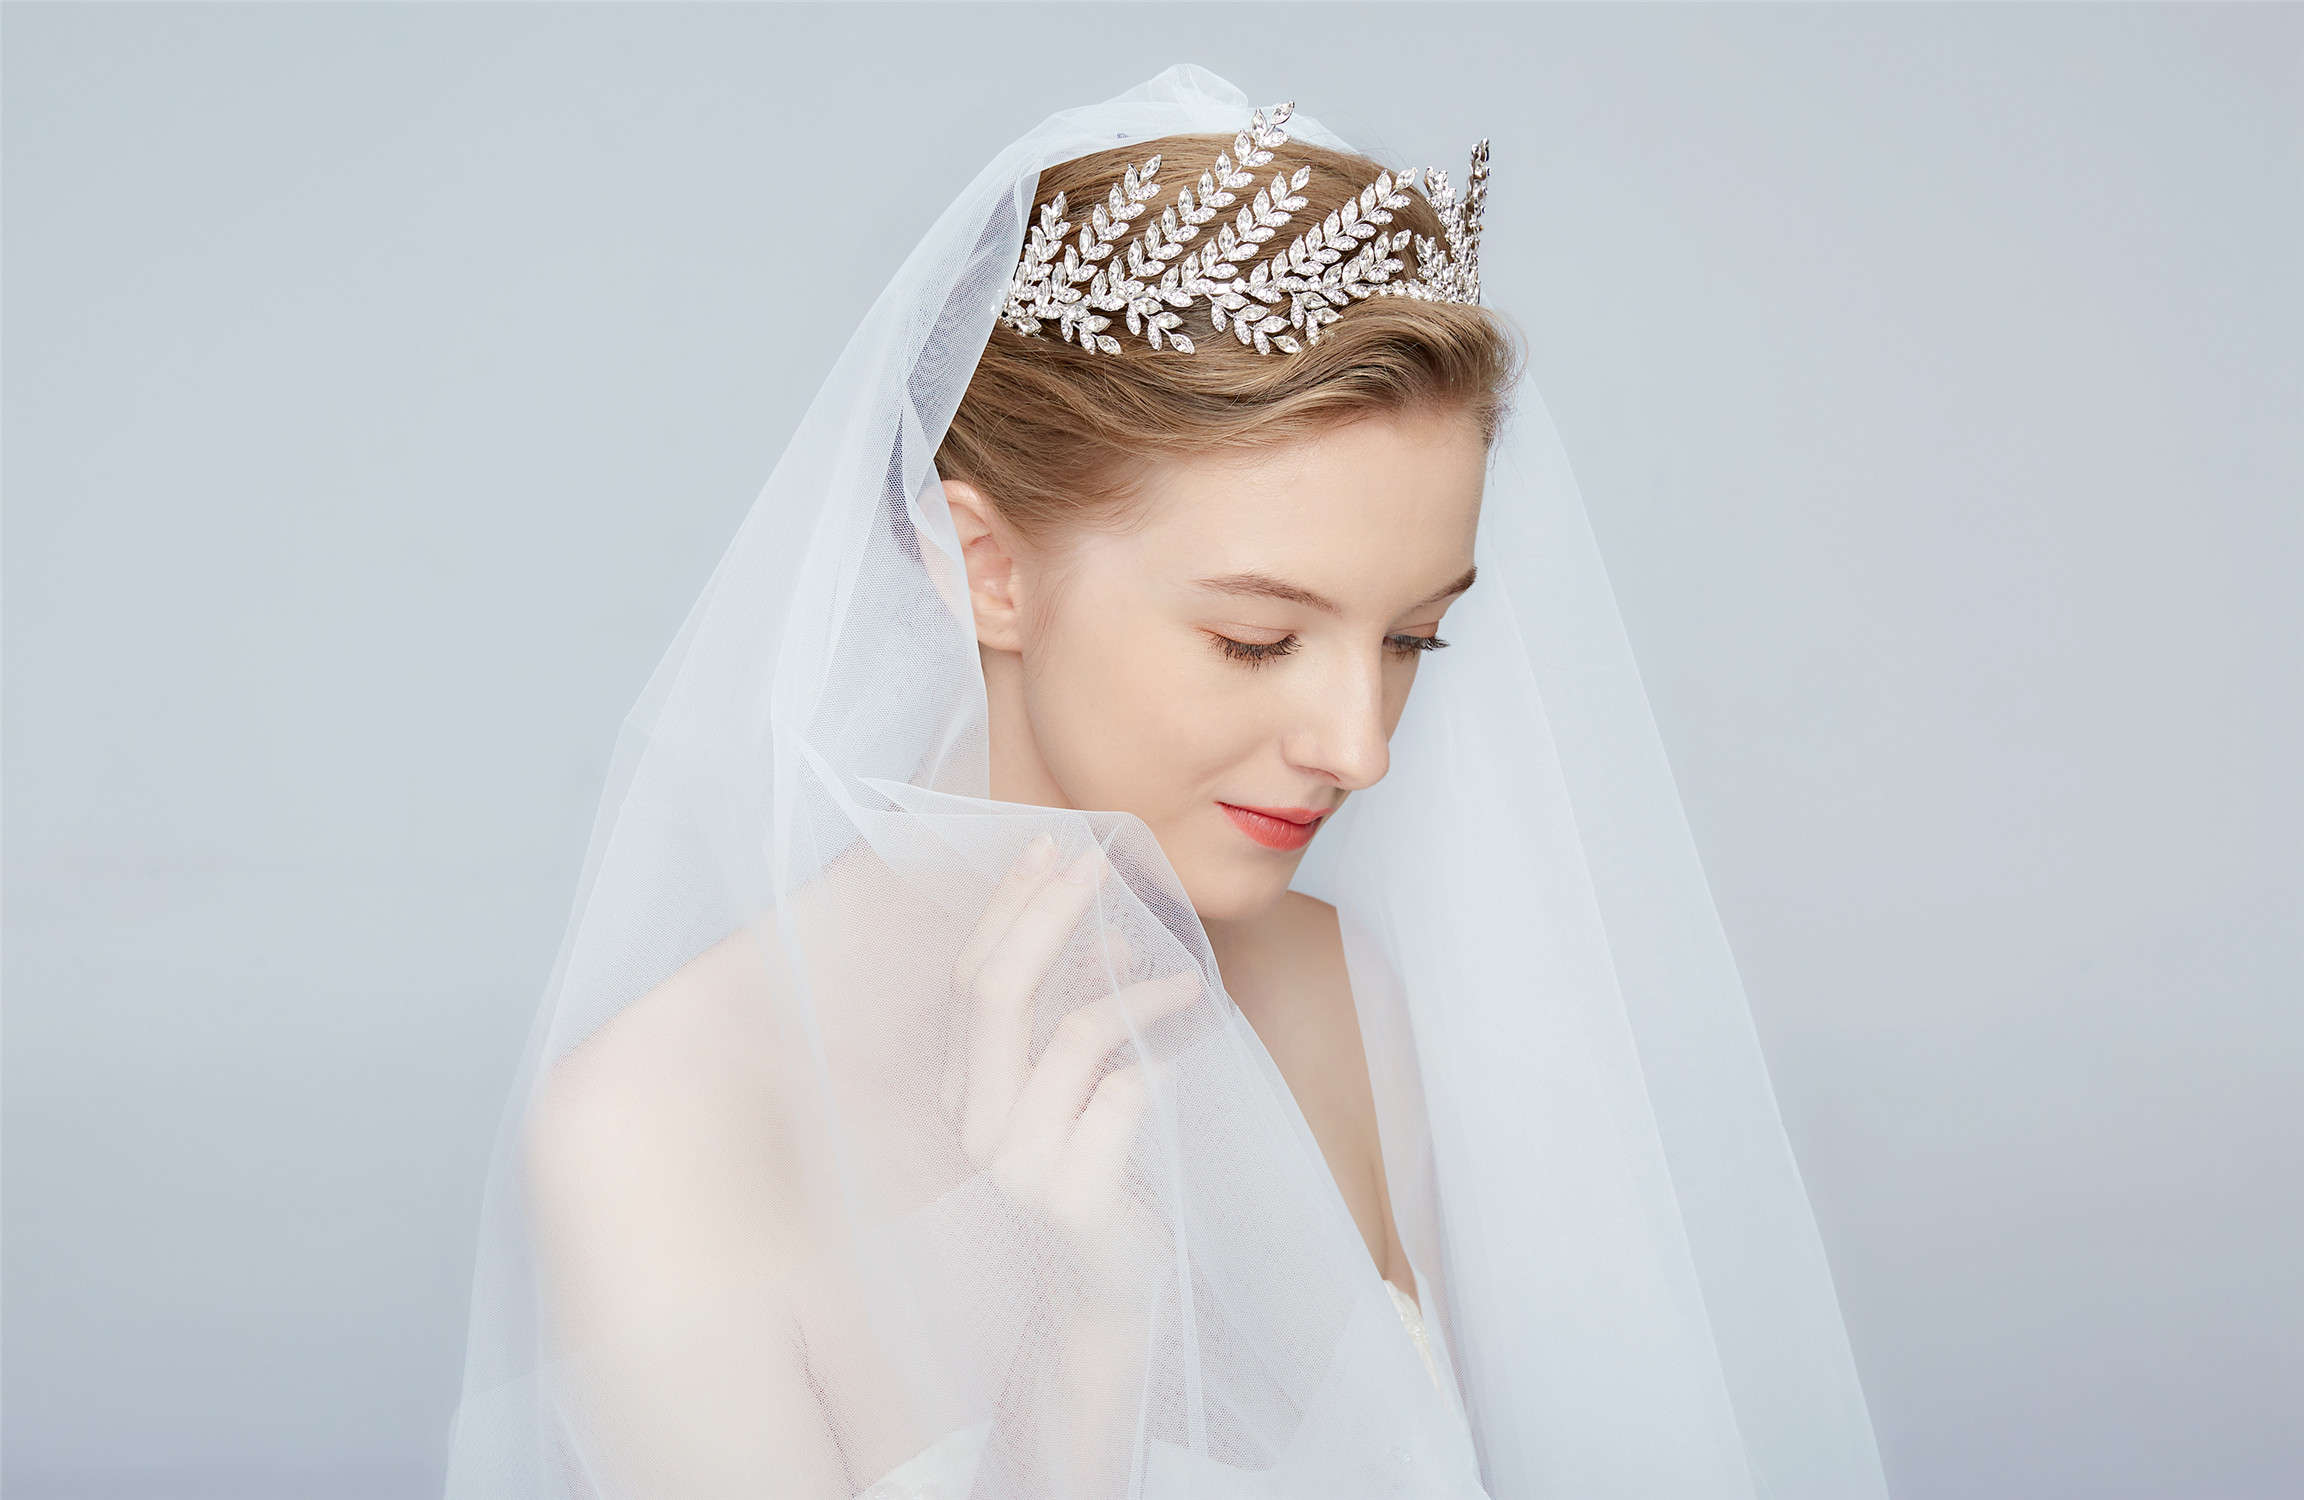 Luxury Handmade Floral Bridal Pearl Hair Accessories Hairbands Wedding Iron Flower Princess Crowns Tiaras For Women 1 buyer